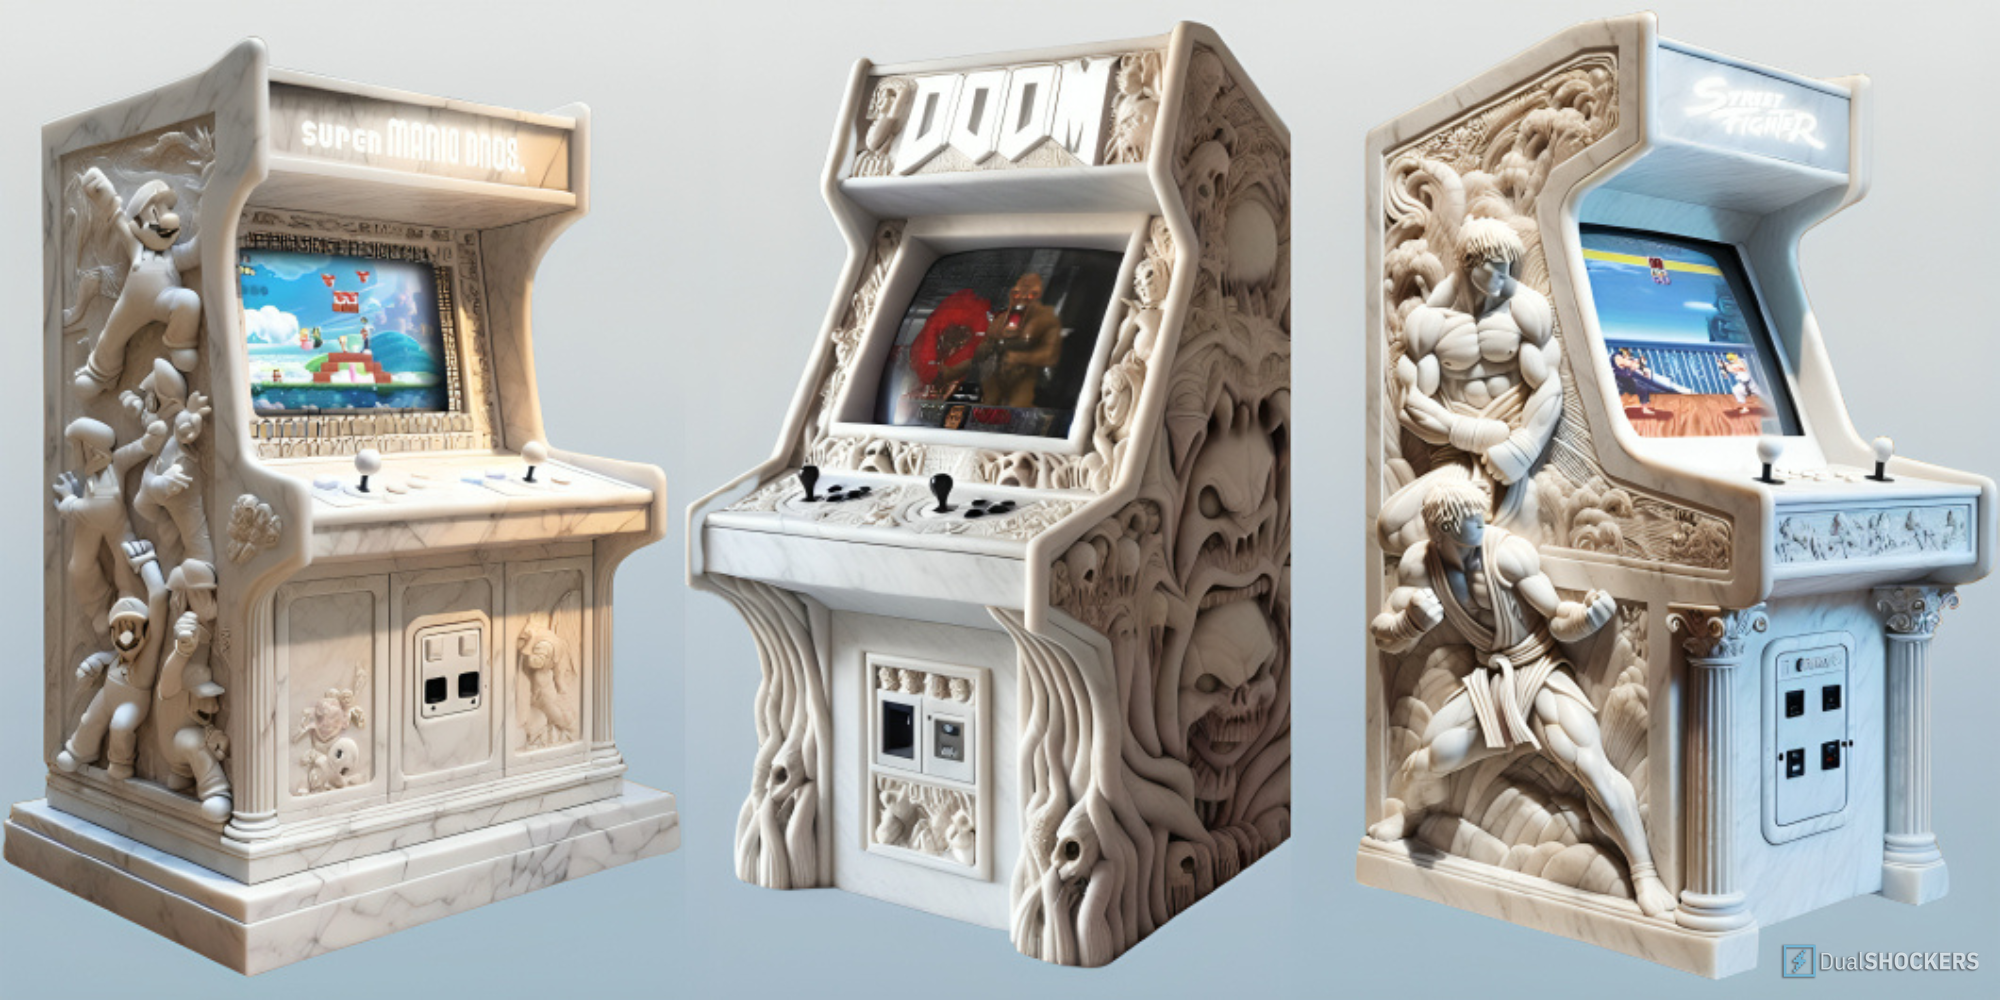 Marble arcade cabinet